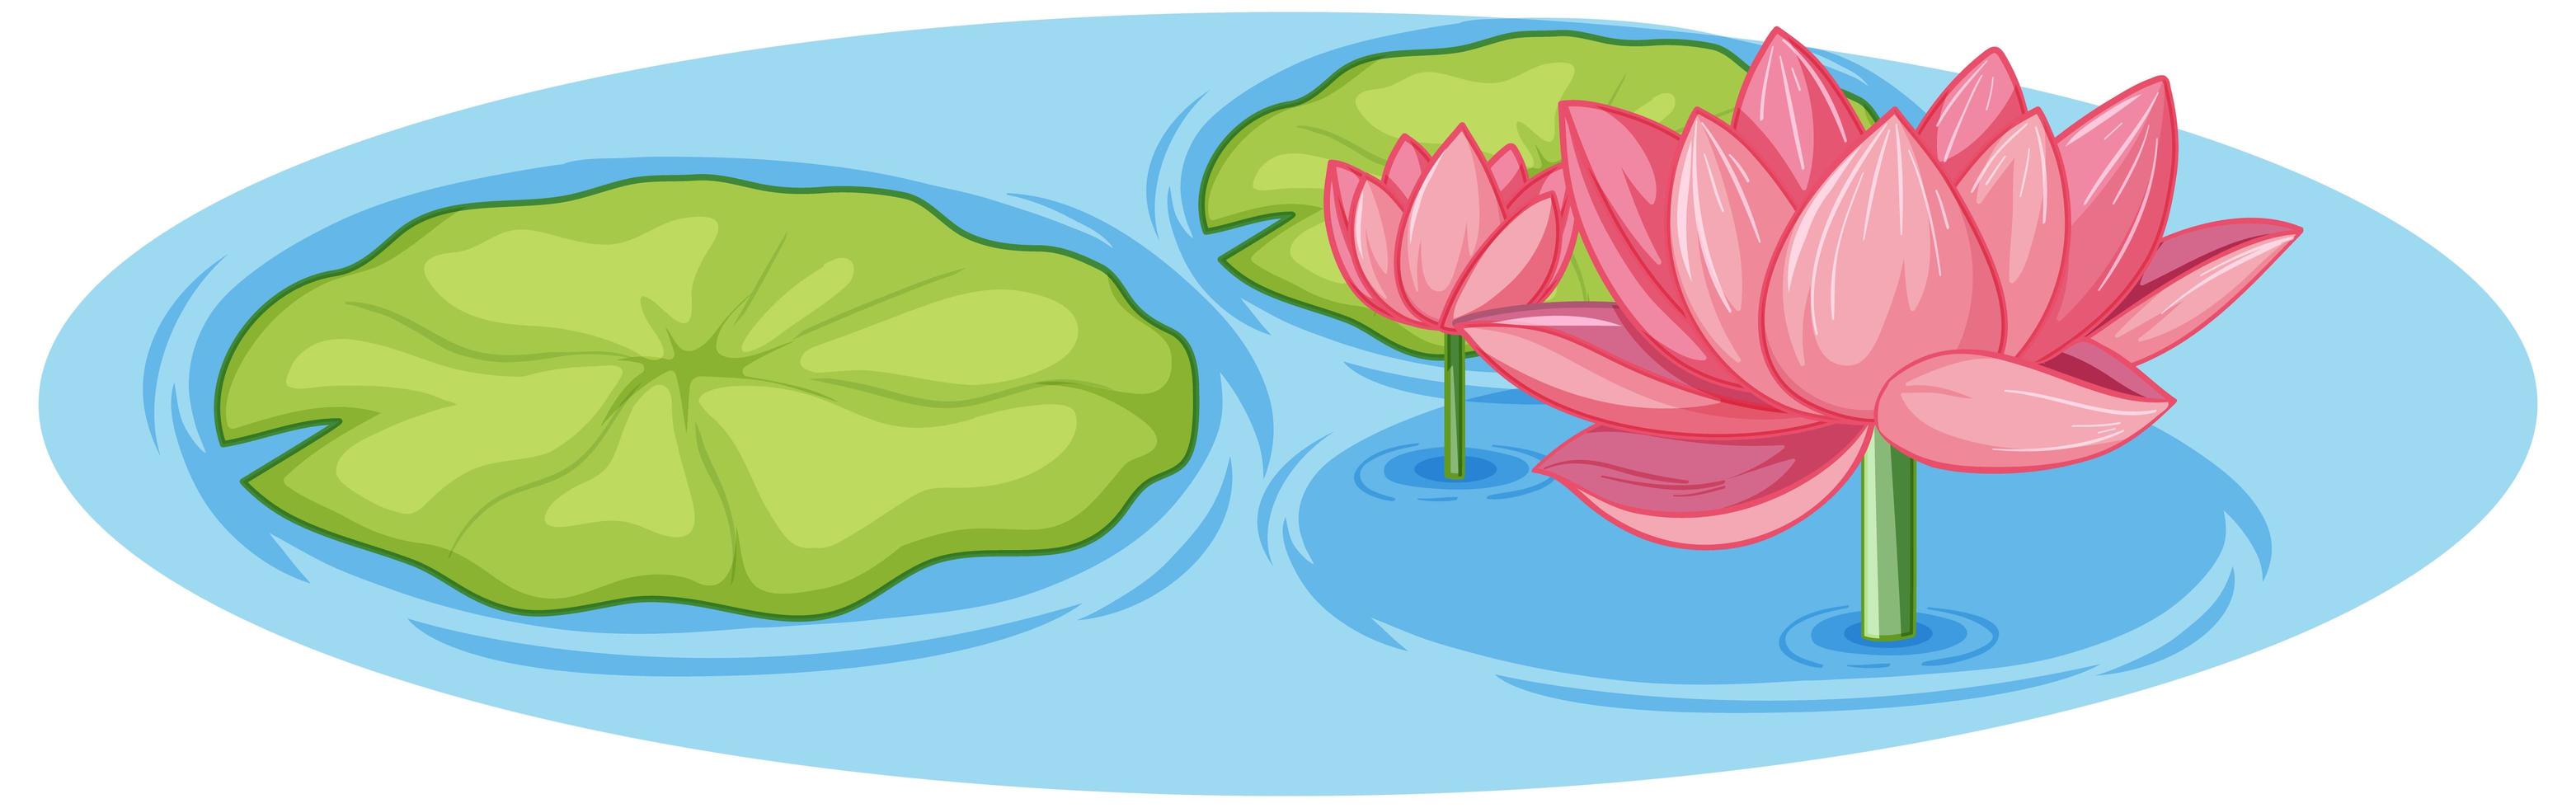 lótus rosa com folha verde na água vetor